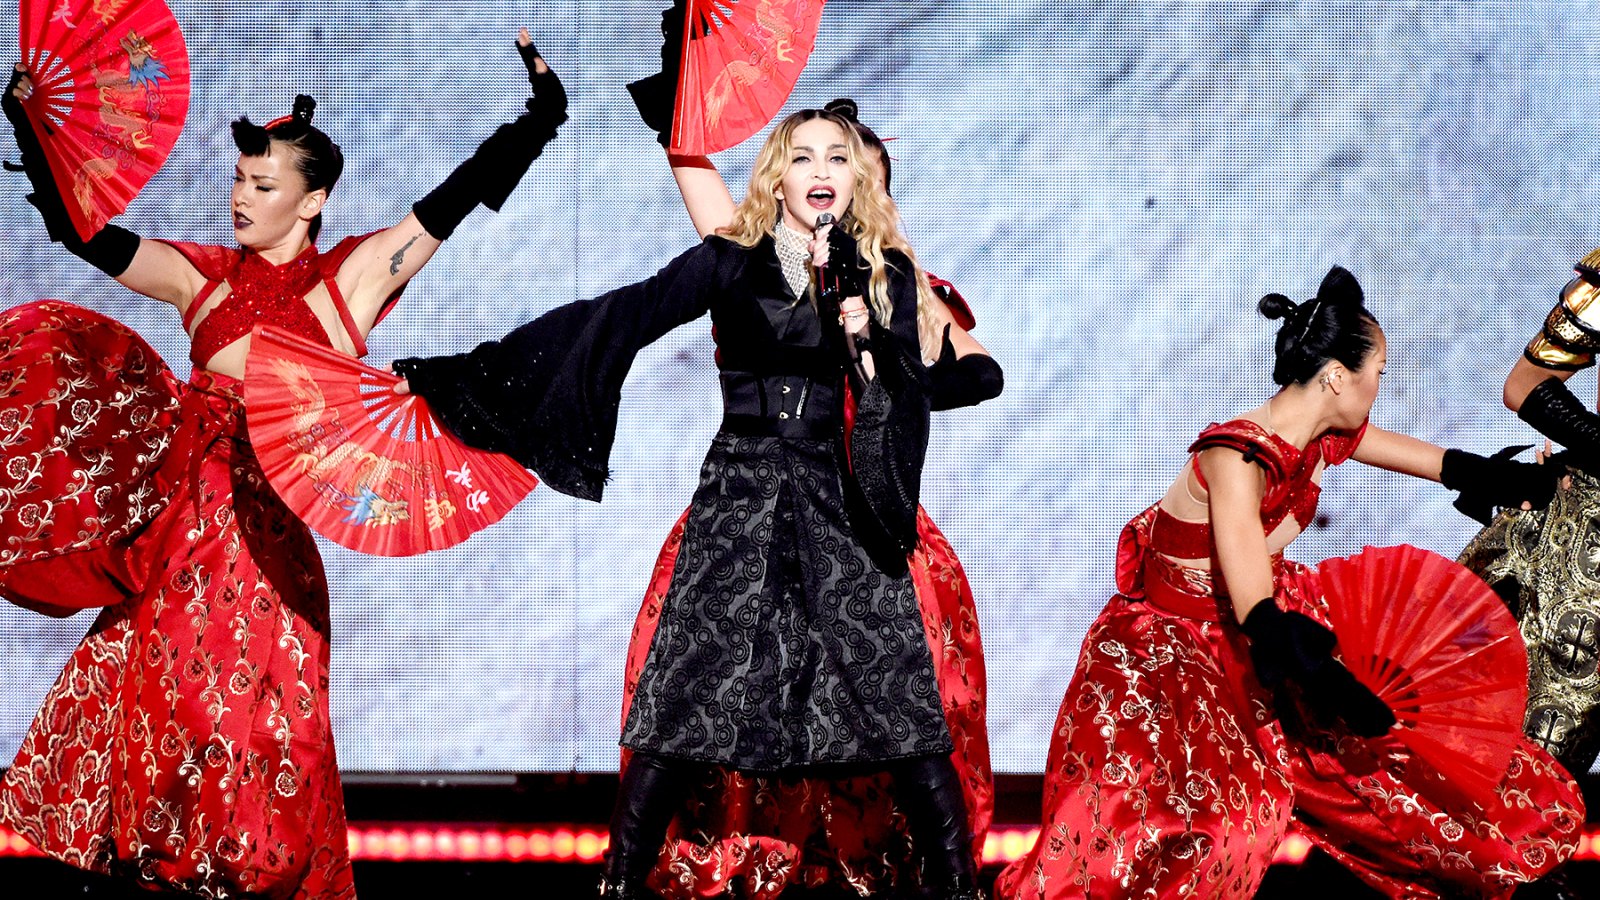 Madonna at Madison Square Garden